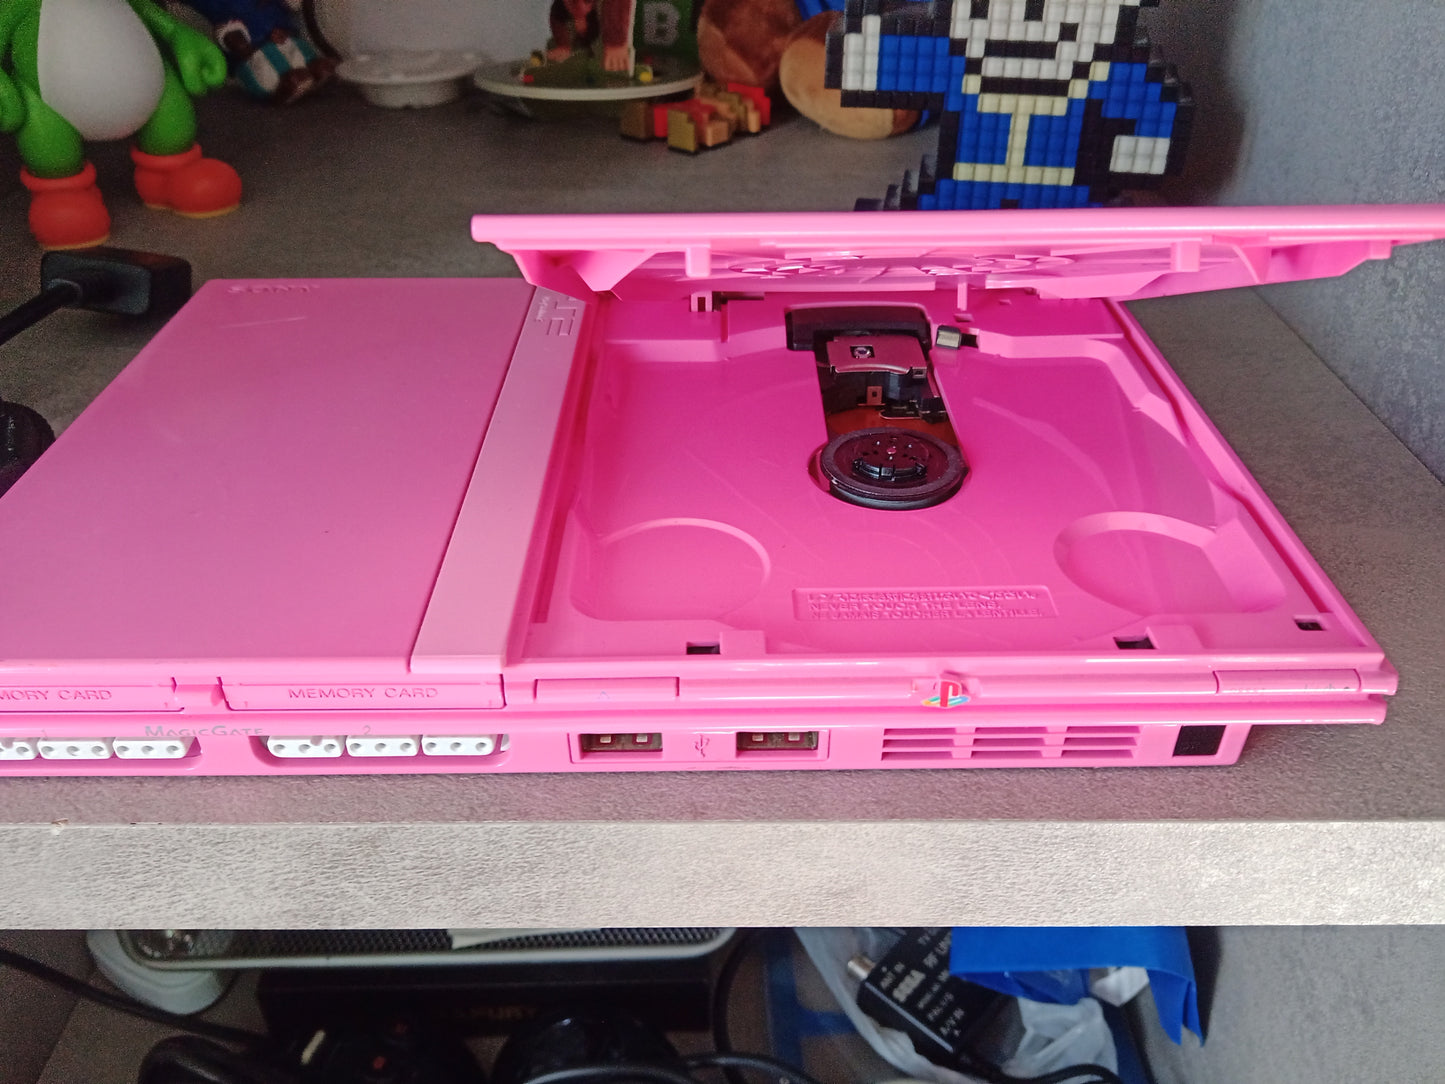 Playstation 2 Pink + Worms Blast